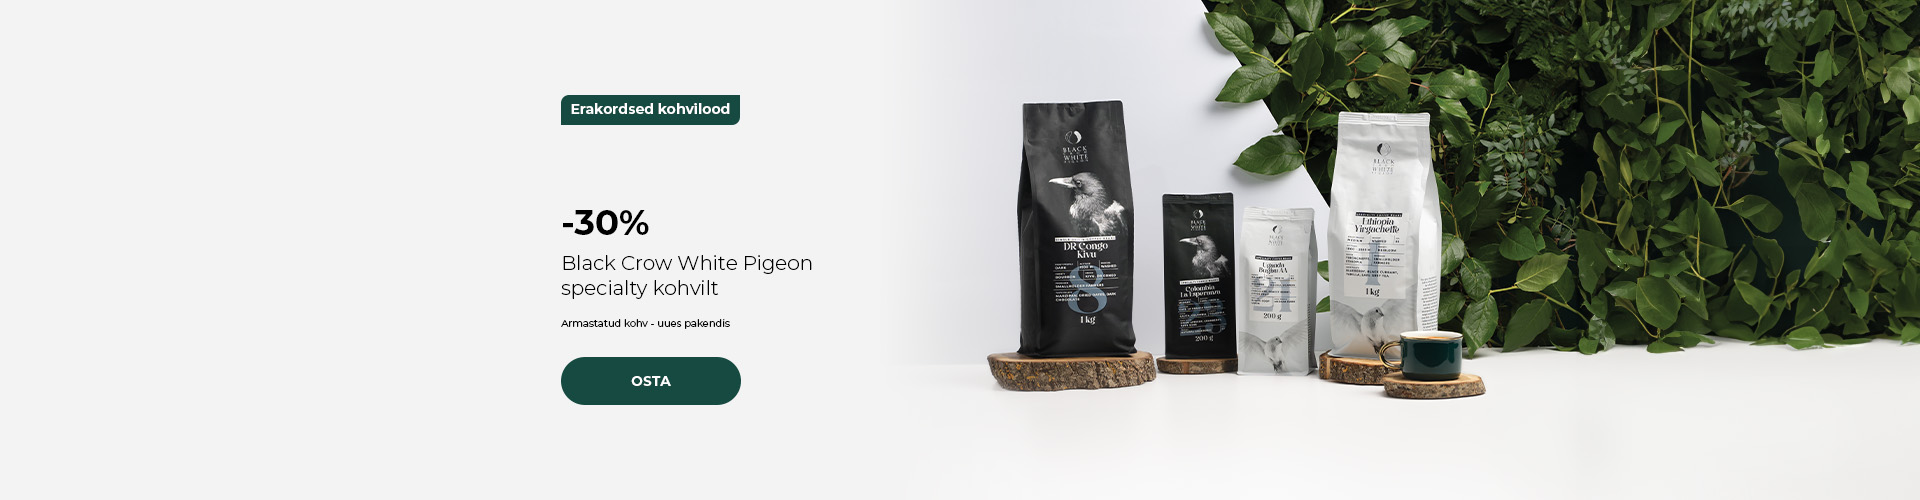 -30% Black Crow White Pigeon specialty kohvilt